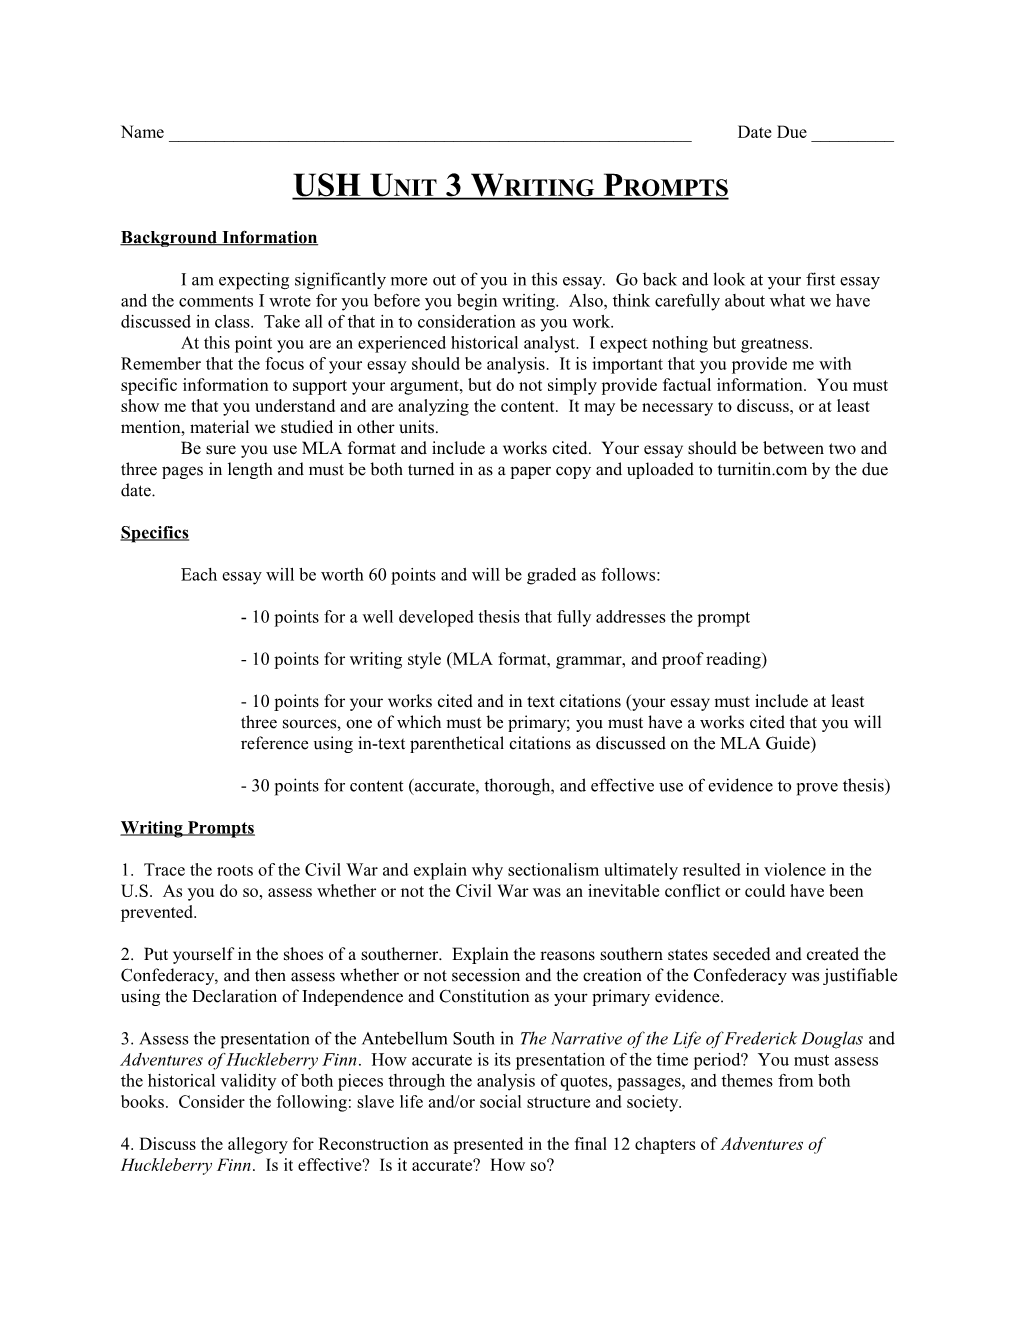 USH Unit 3 Writing Prompts